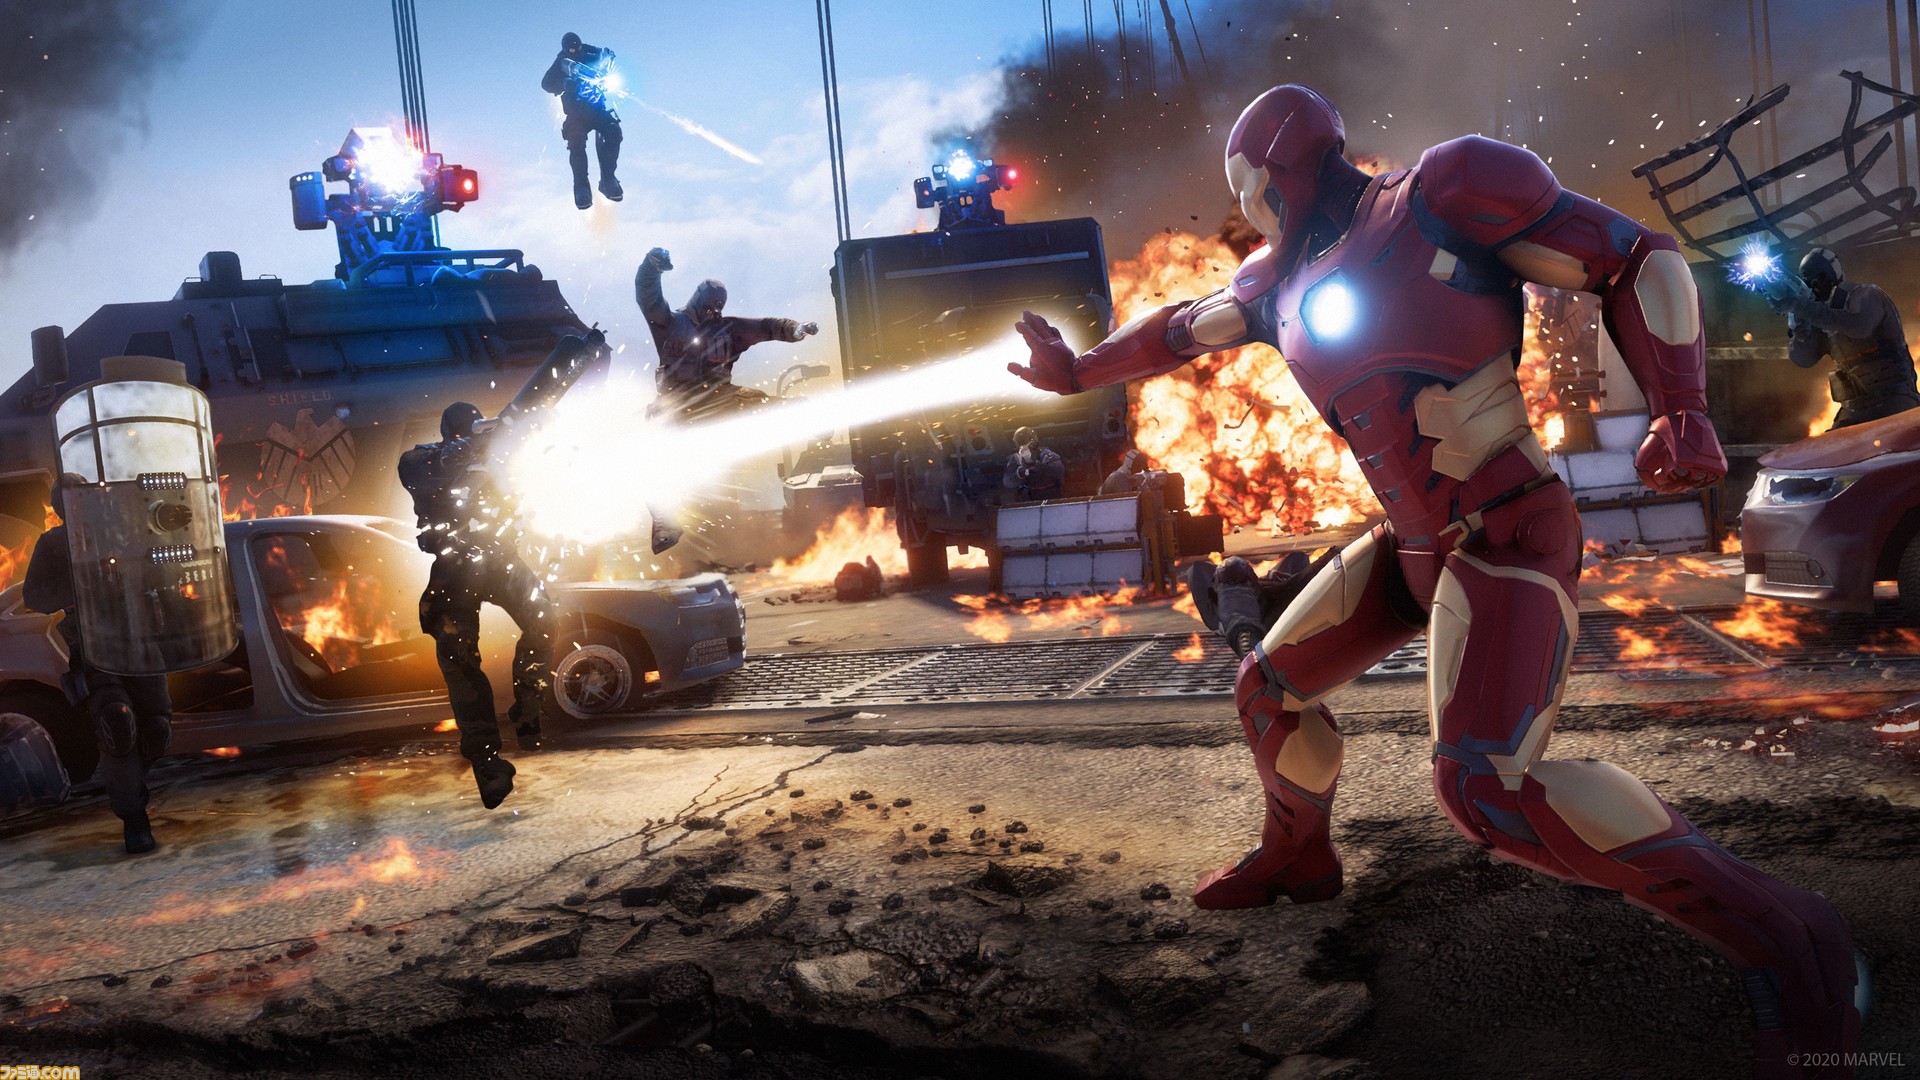 Marvel S Avengers アベンジャーズ レビュー もうすぐオープンベータ開催 映画のようなアクションシーンはヒーローを強化することでさらにド派手に爽快に ファミ通 Com